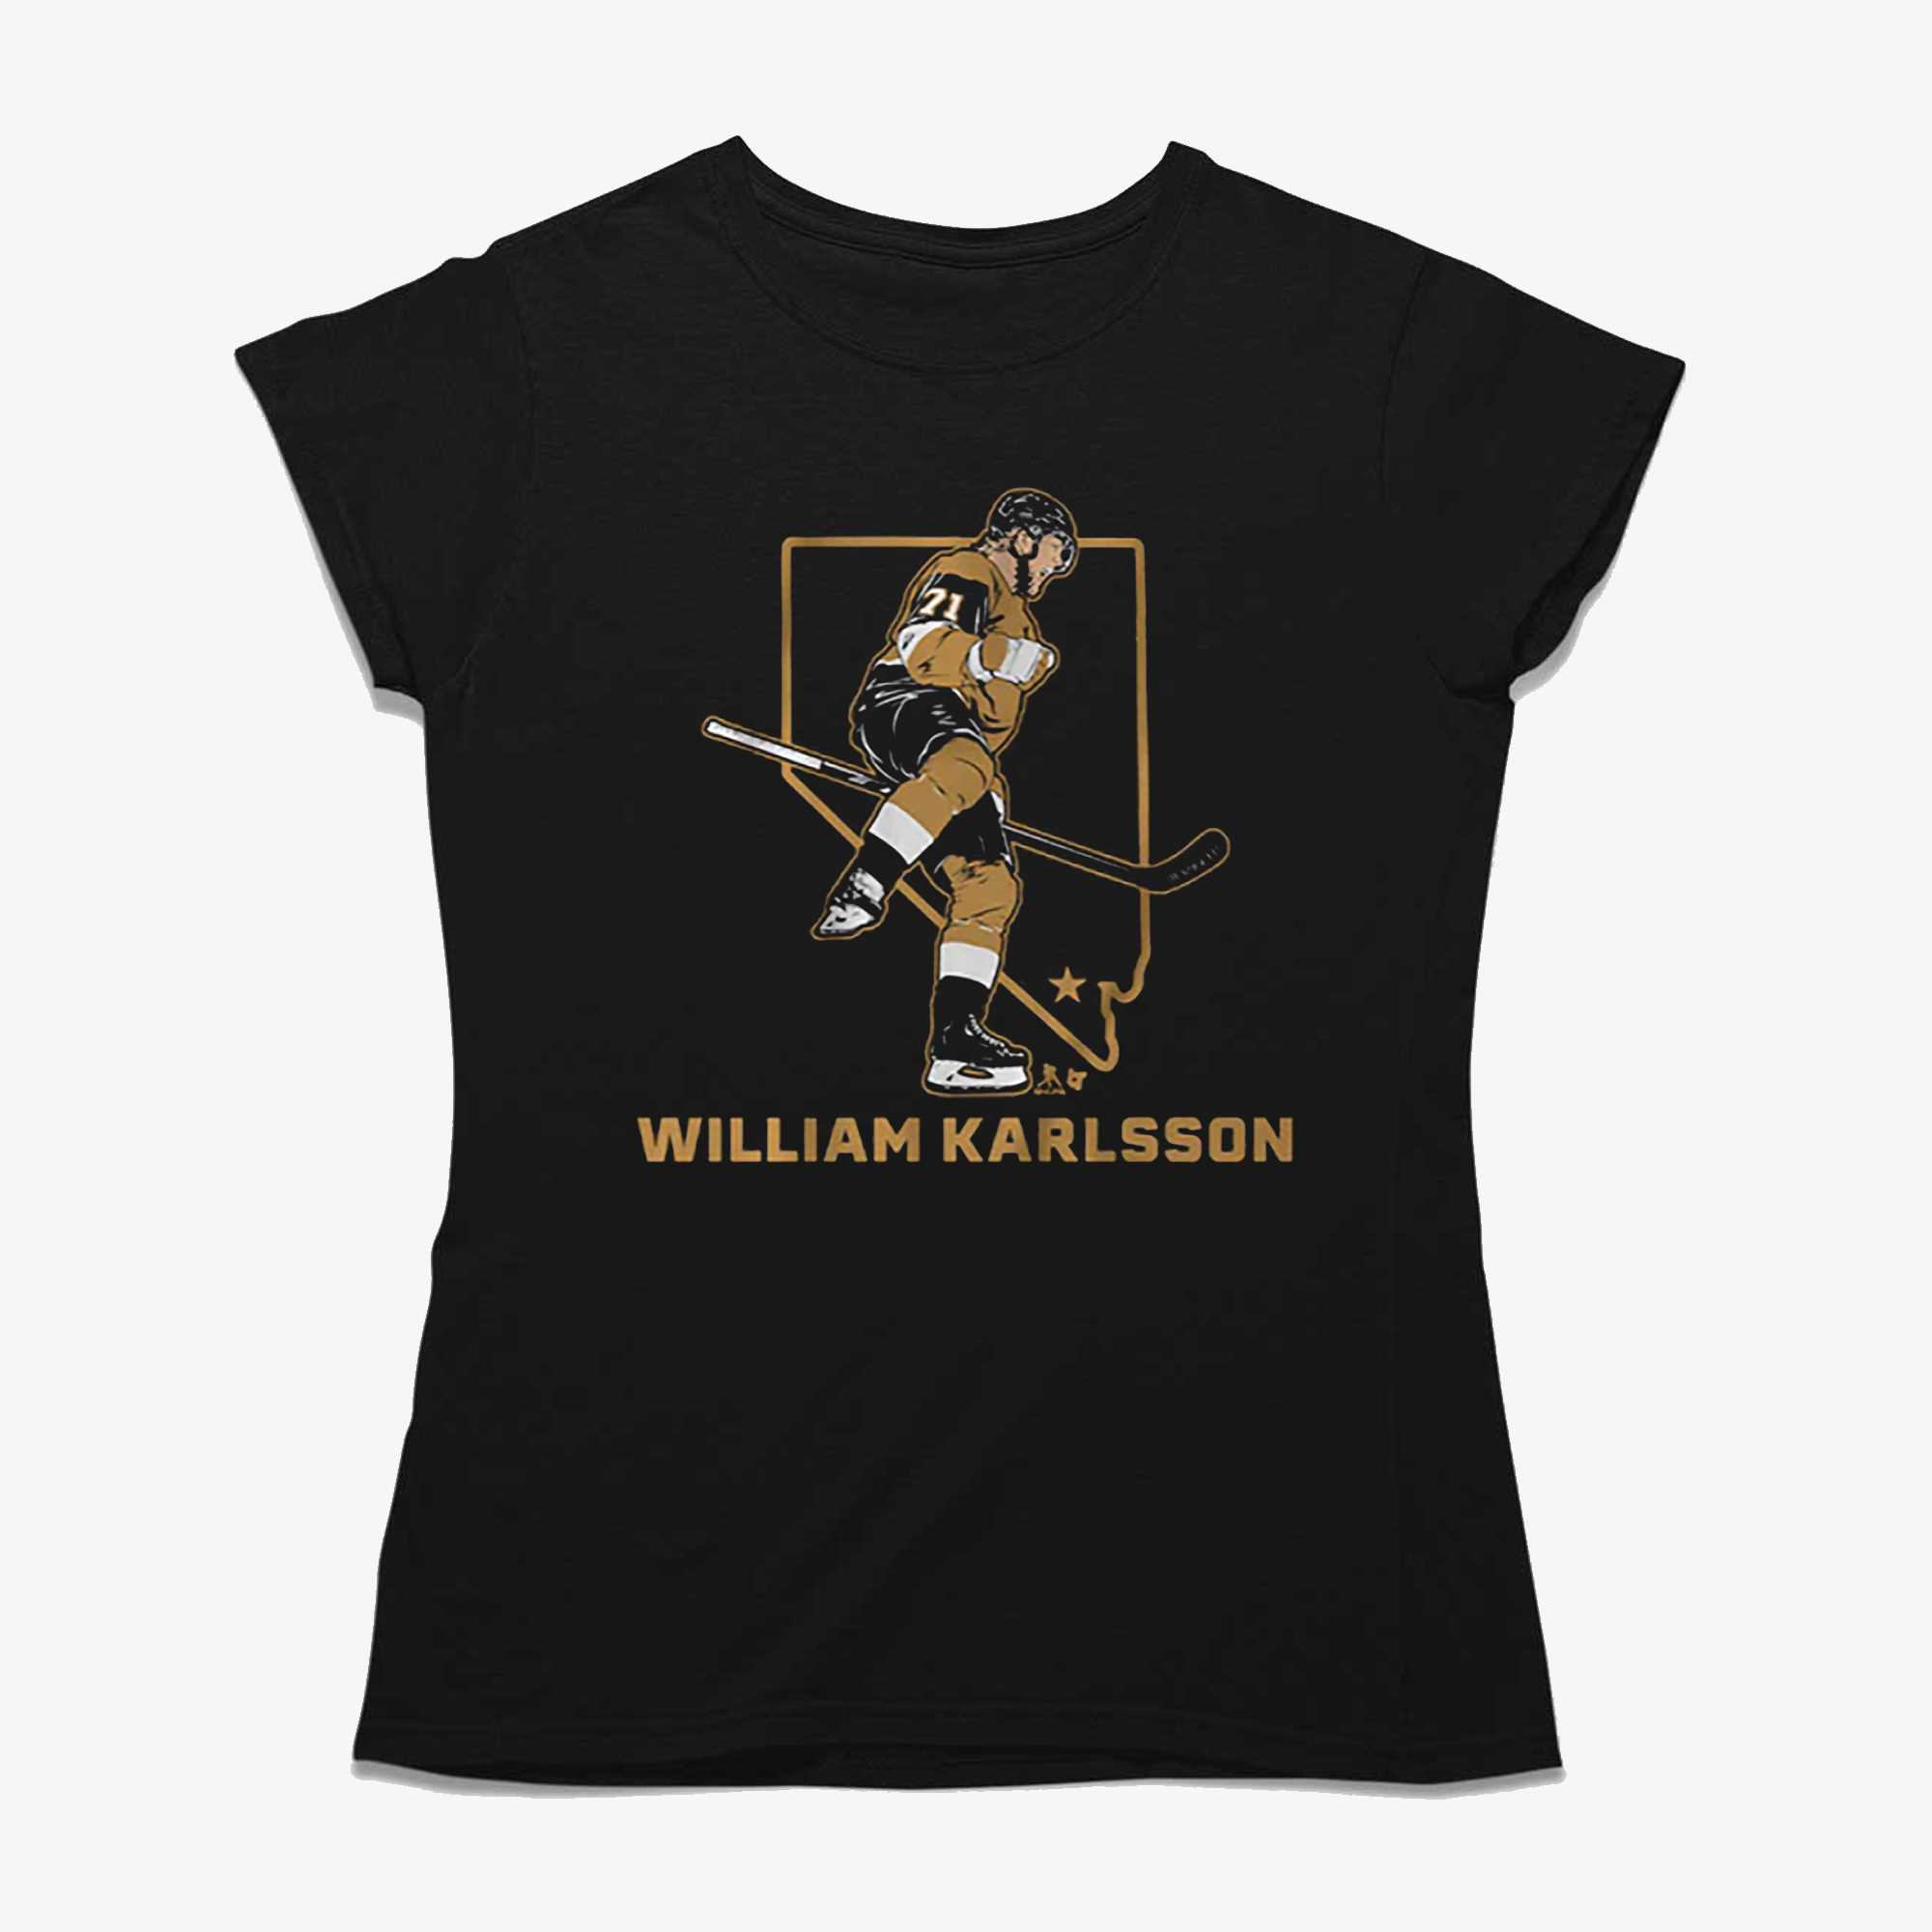 William Karlsson State Star Shirt - Shibtee Clothing